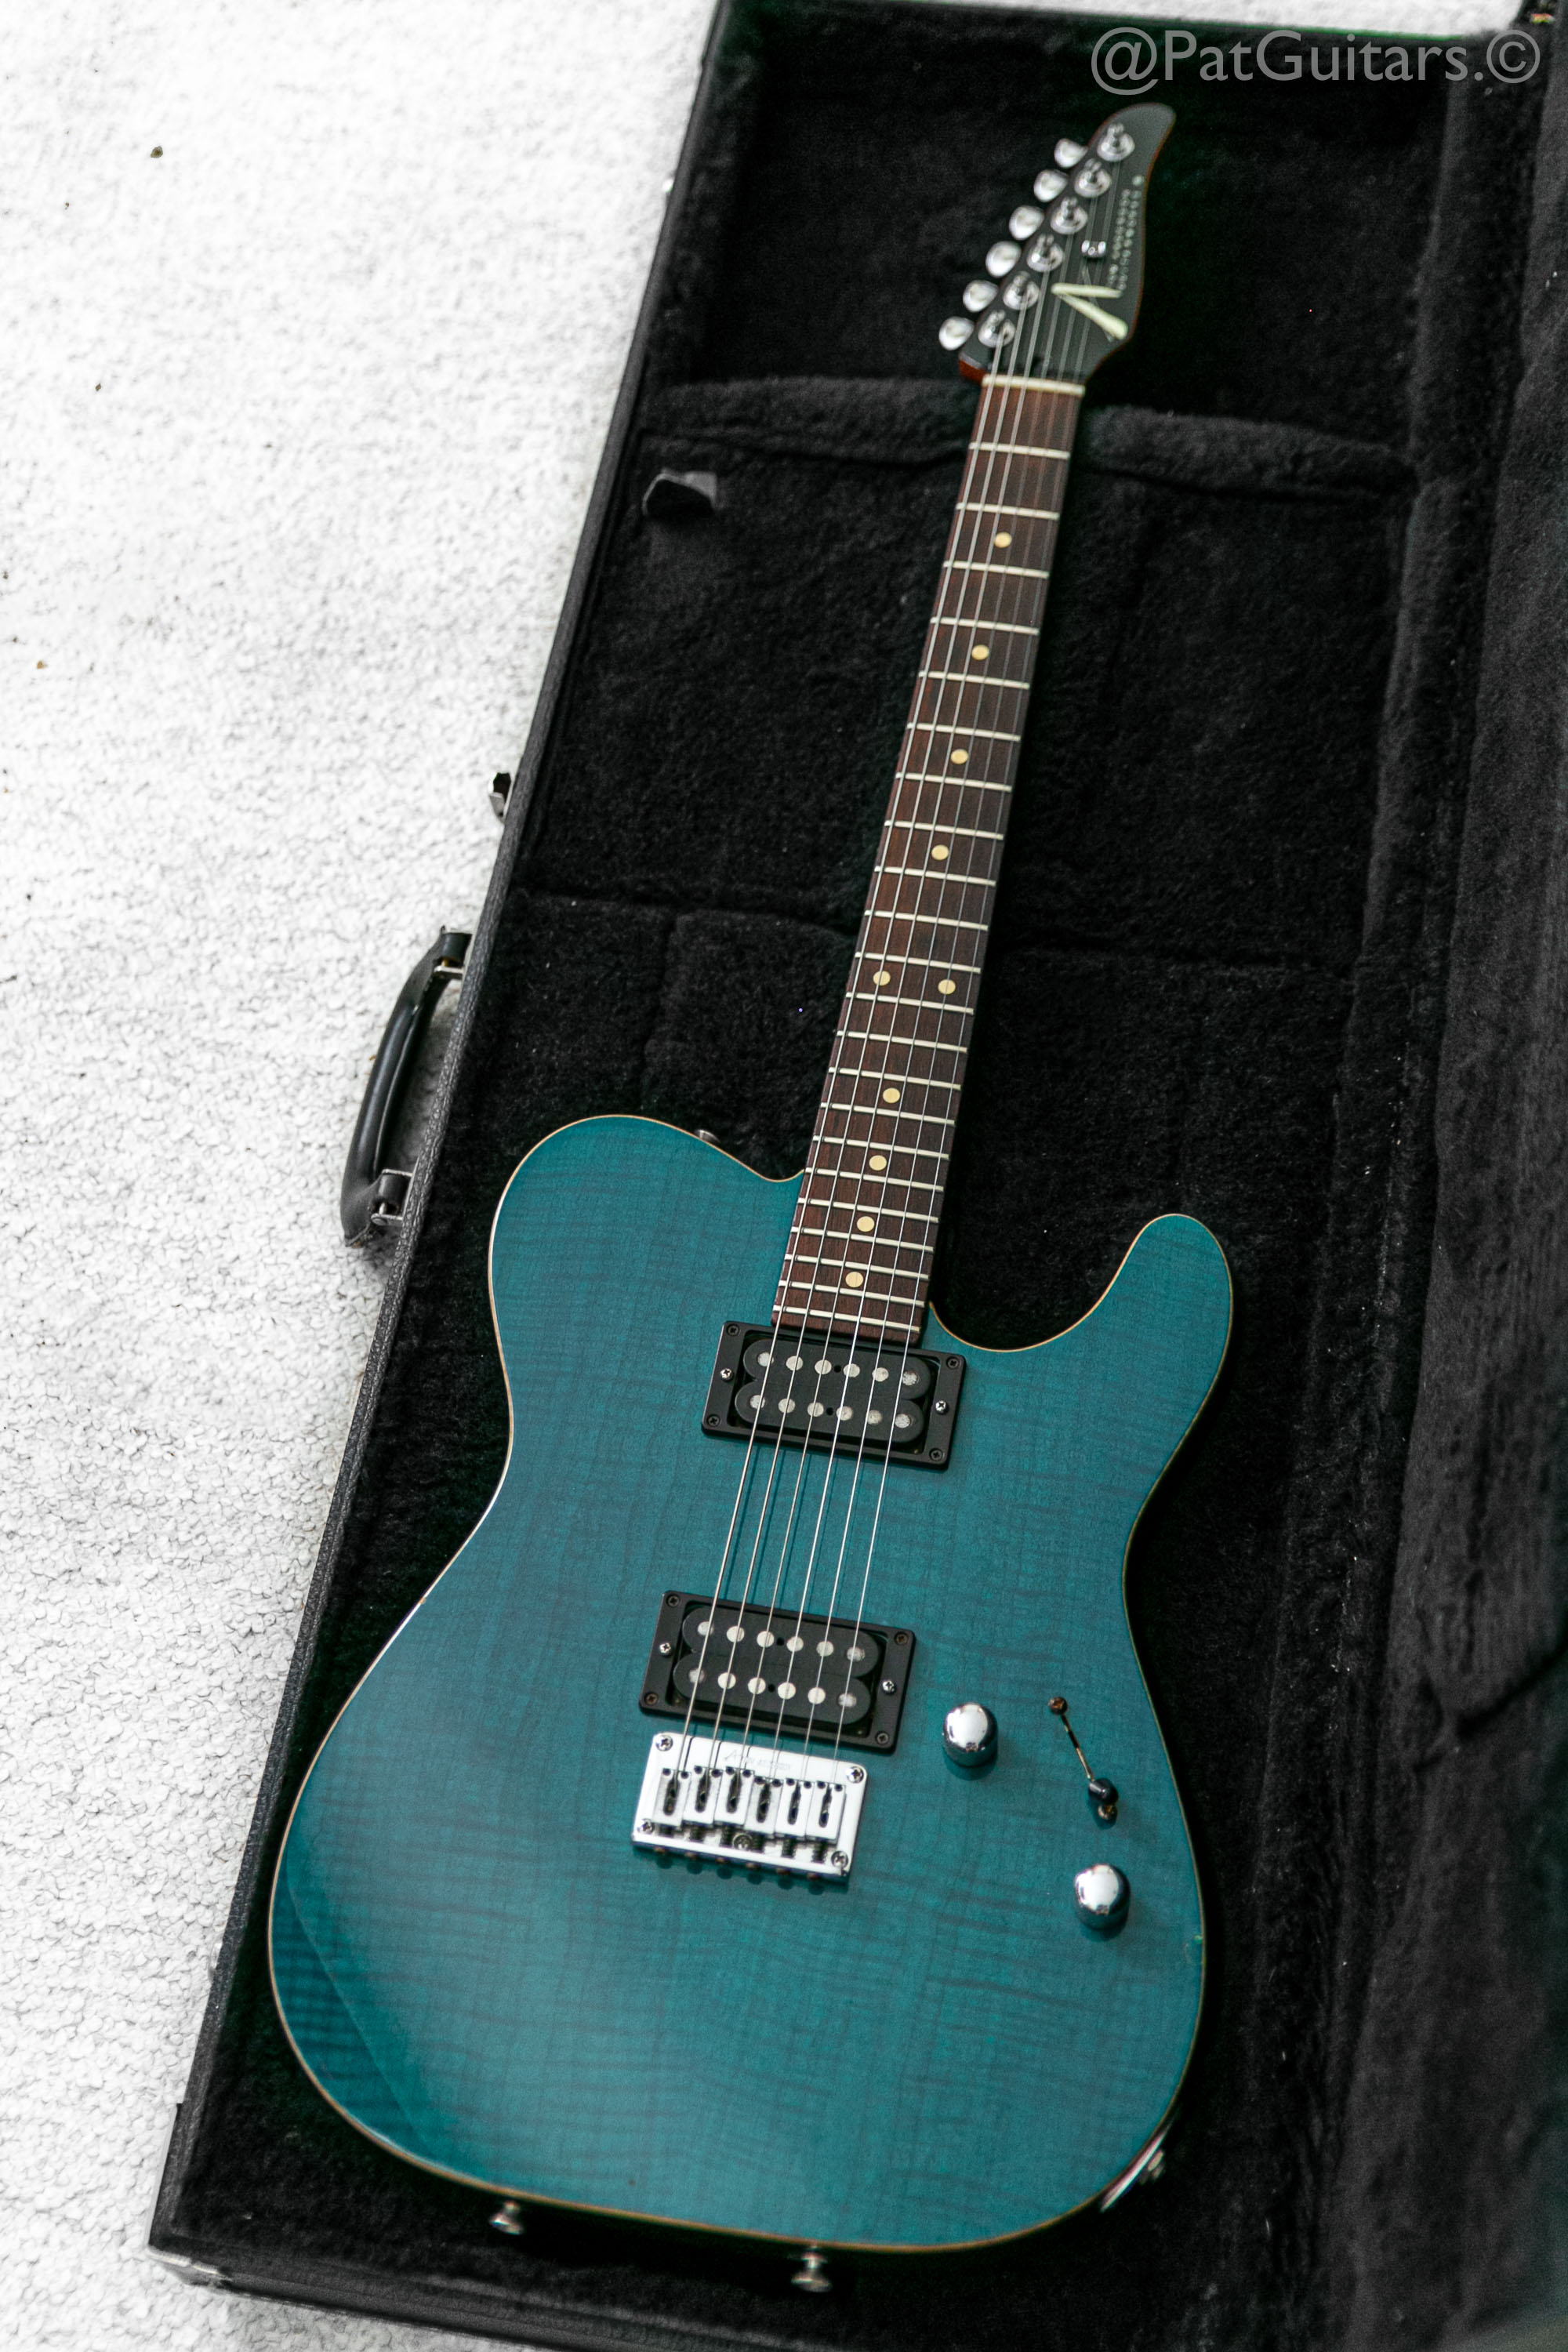 tom anderson guitars for sale uk